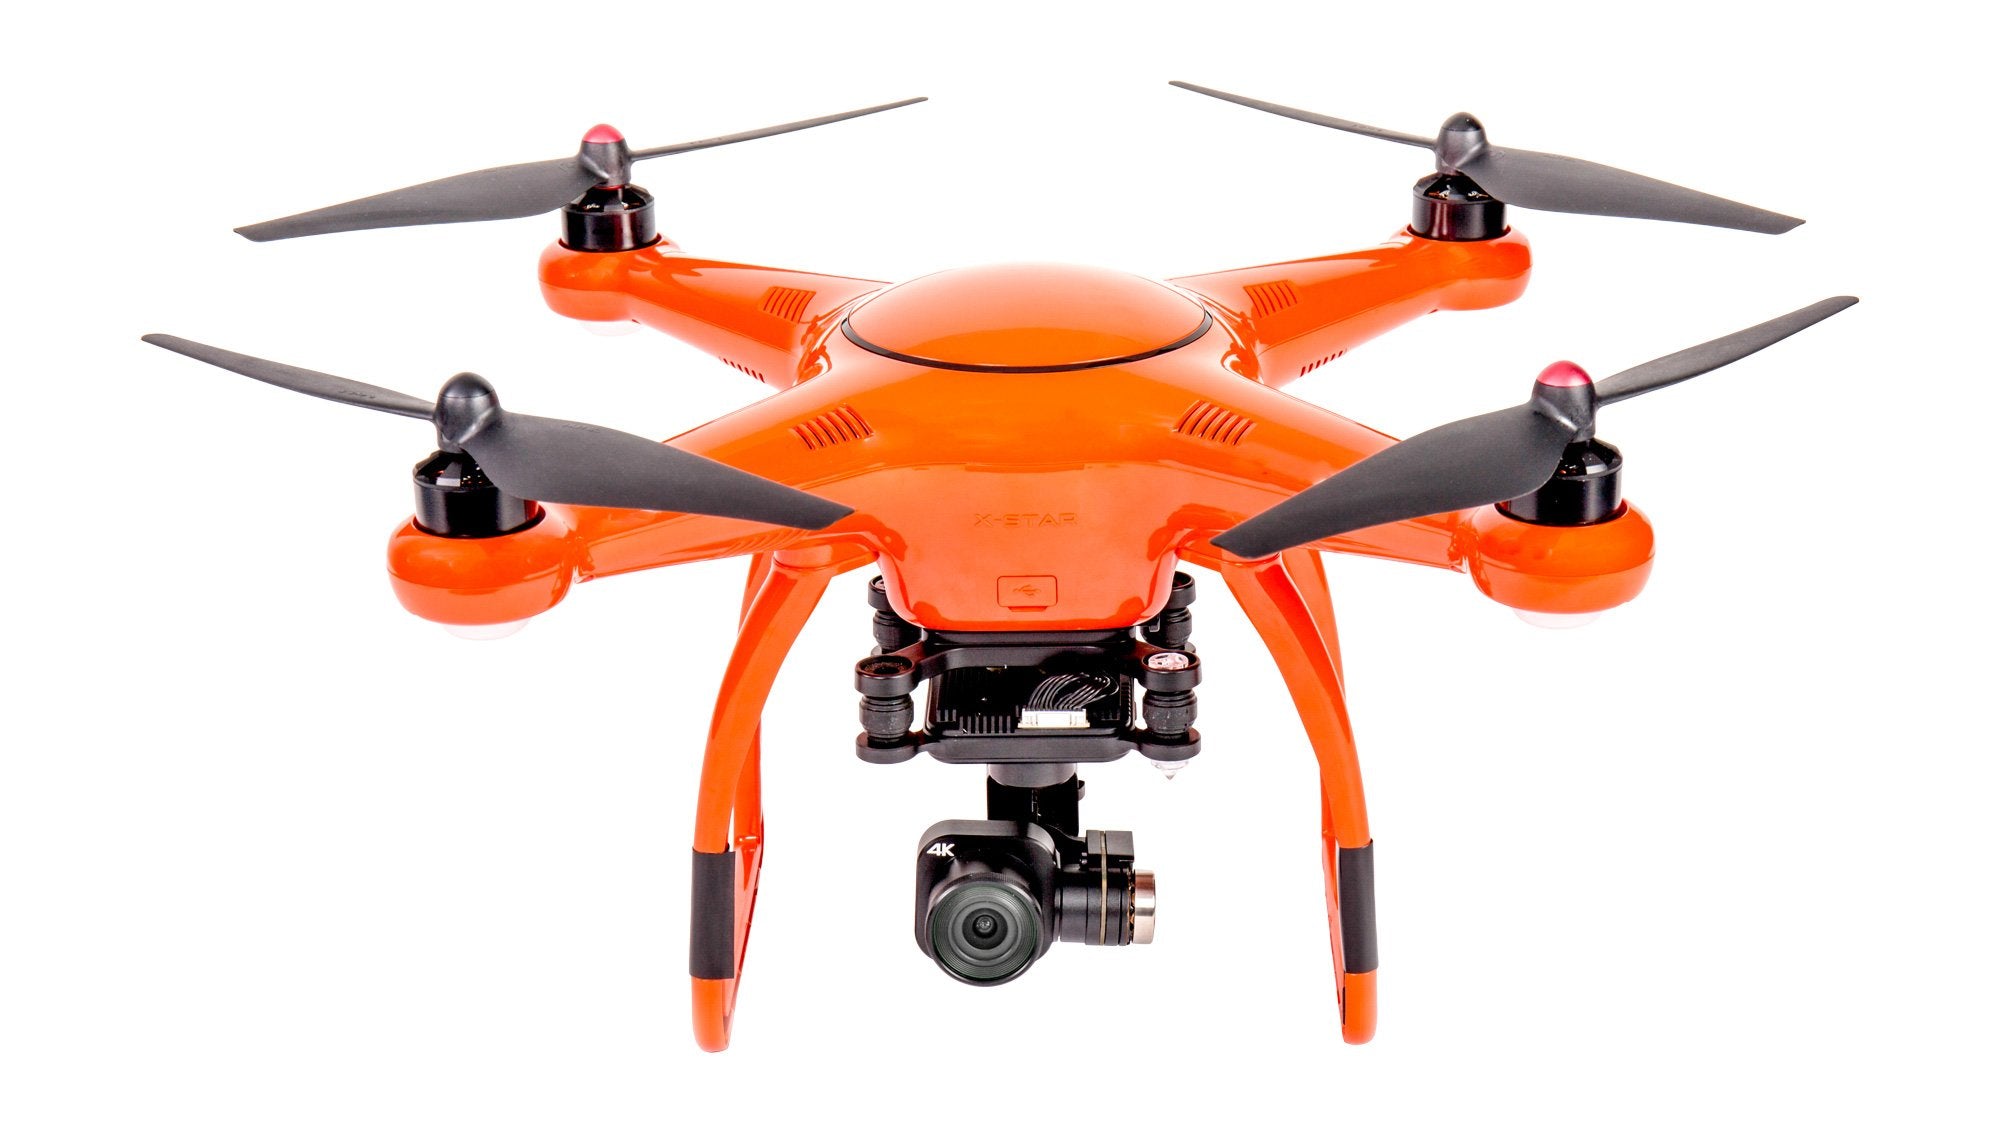 About the Autel X-Star Premium Drone Replies